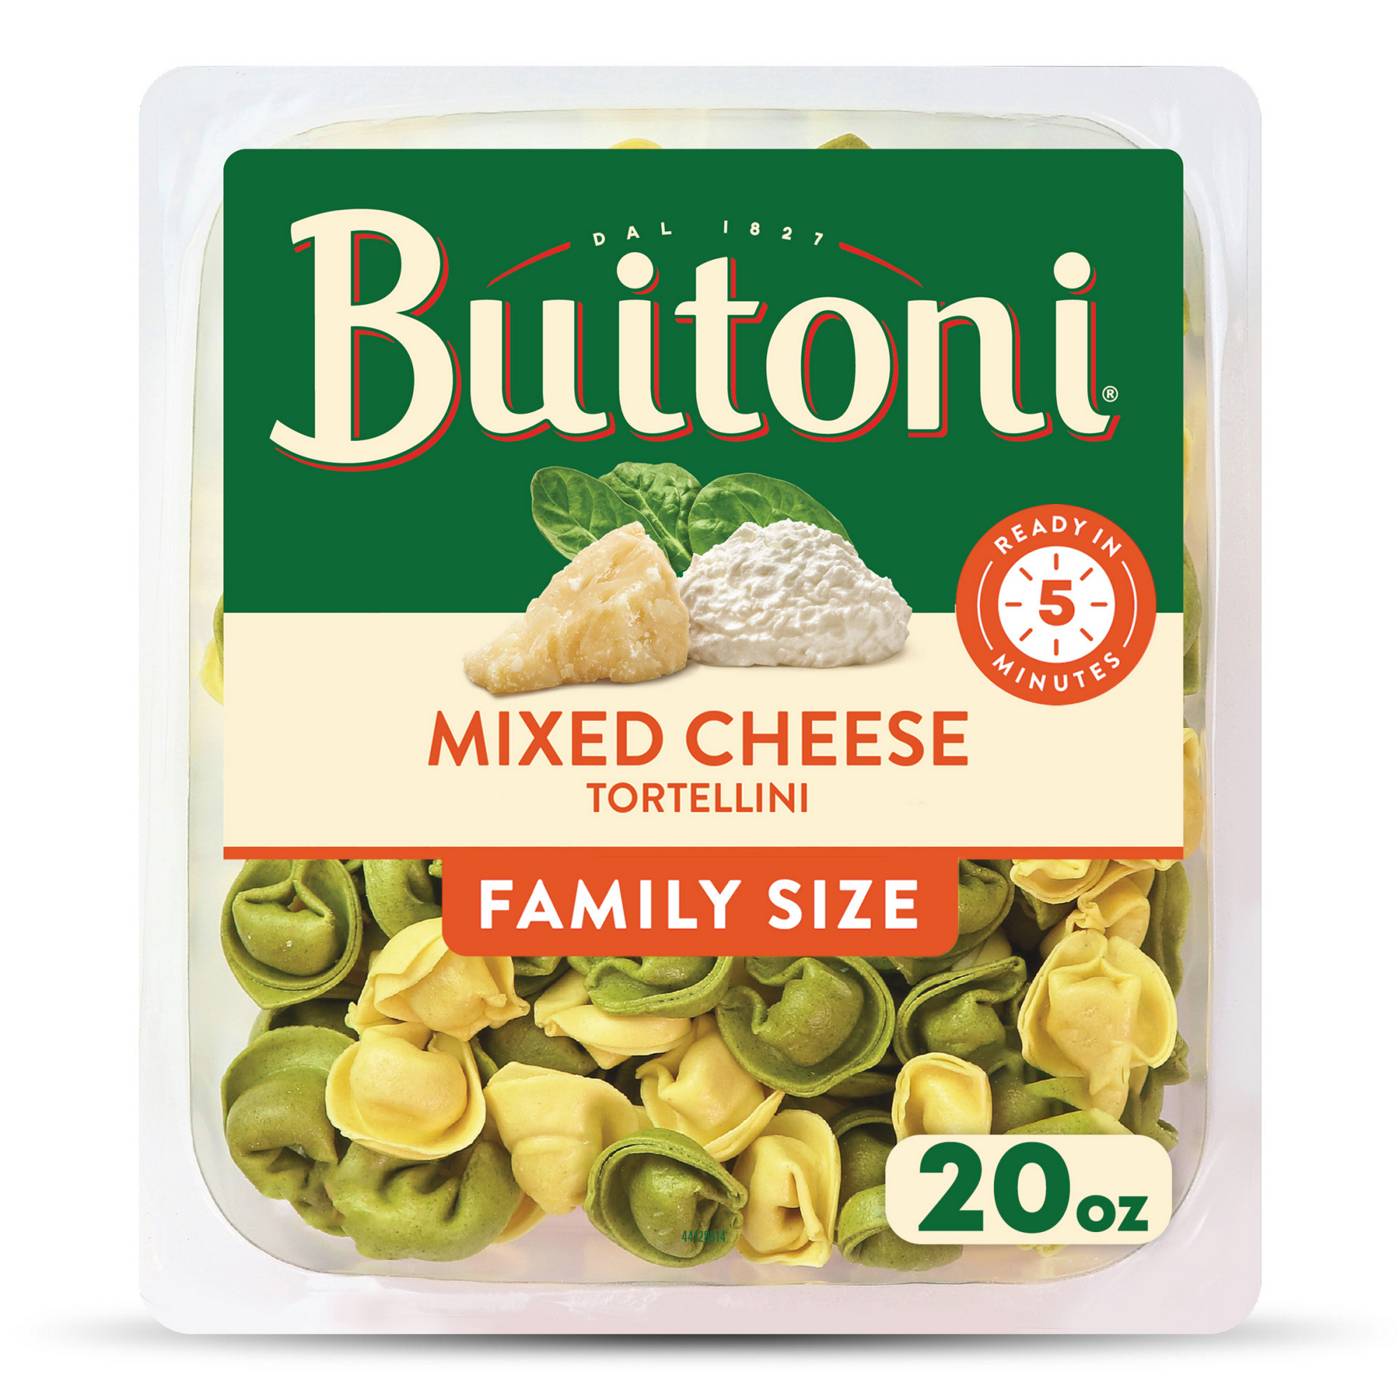 Buitoni Mixed Cheese Tortellini; image 1 of 5